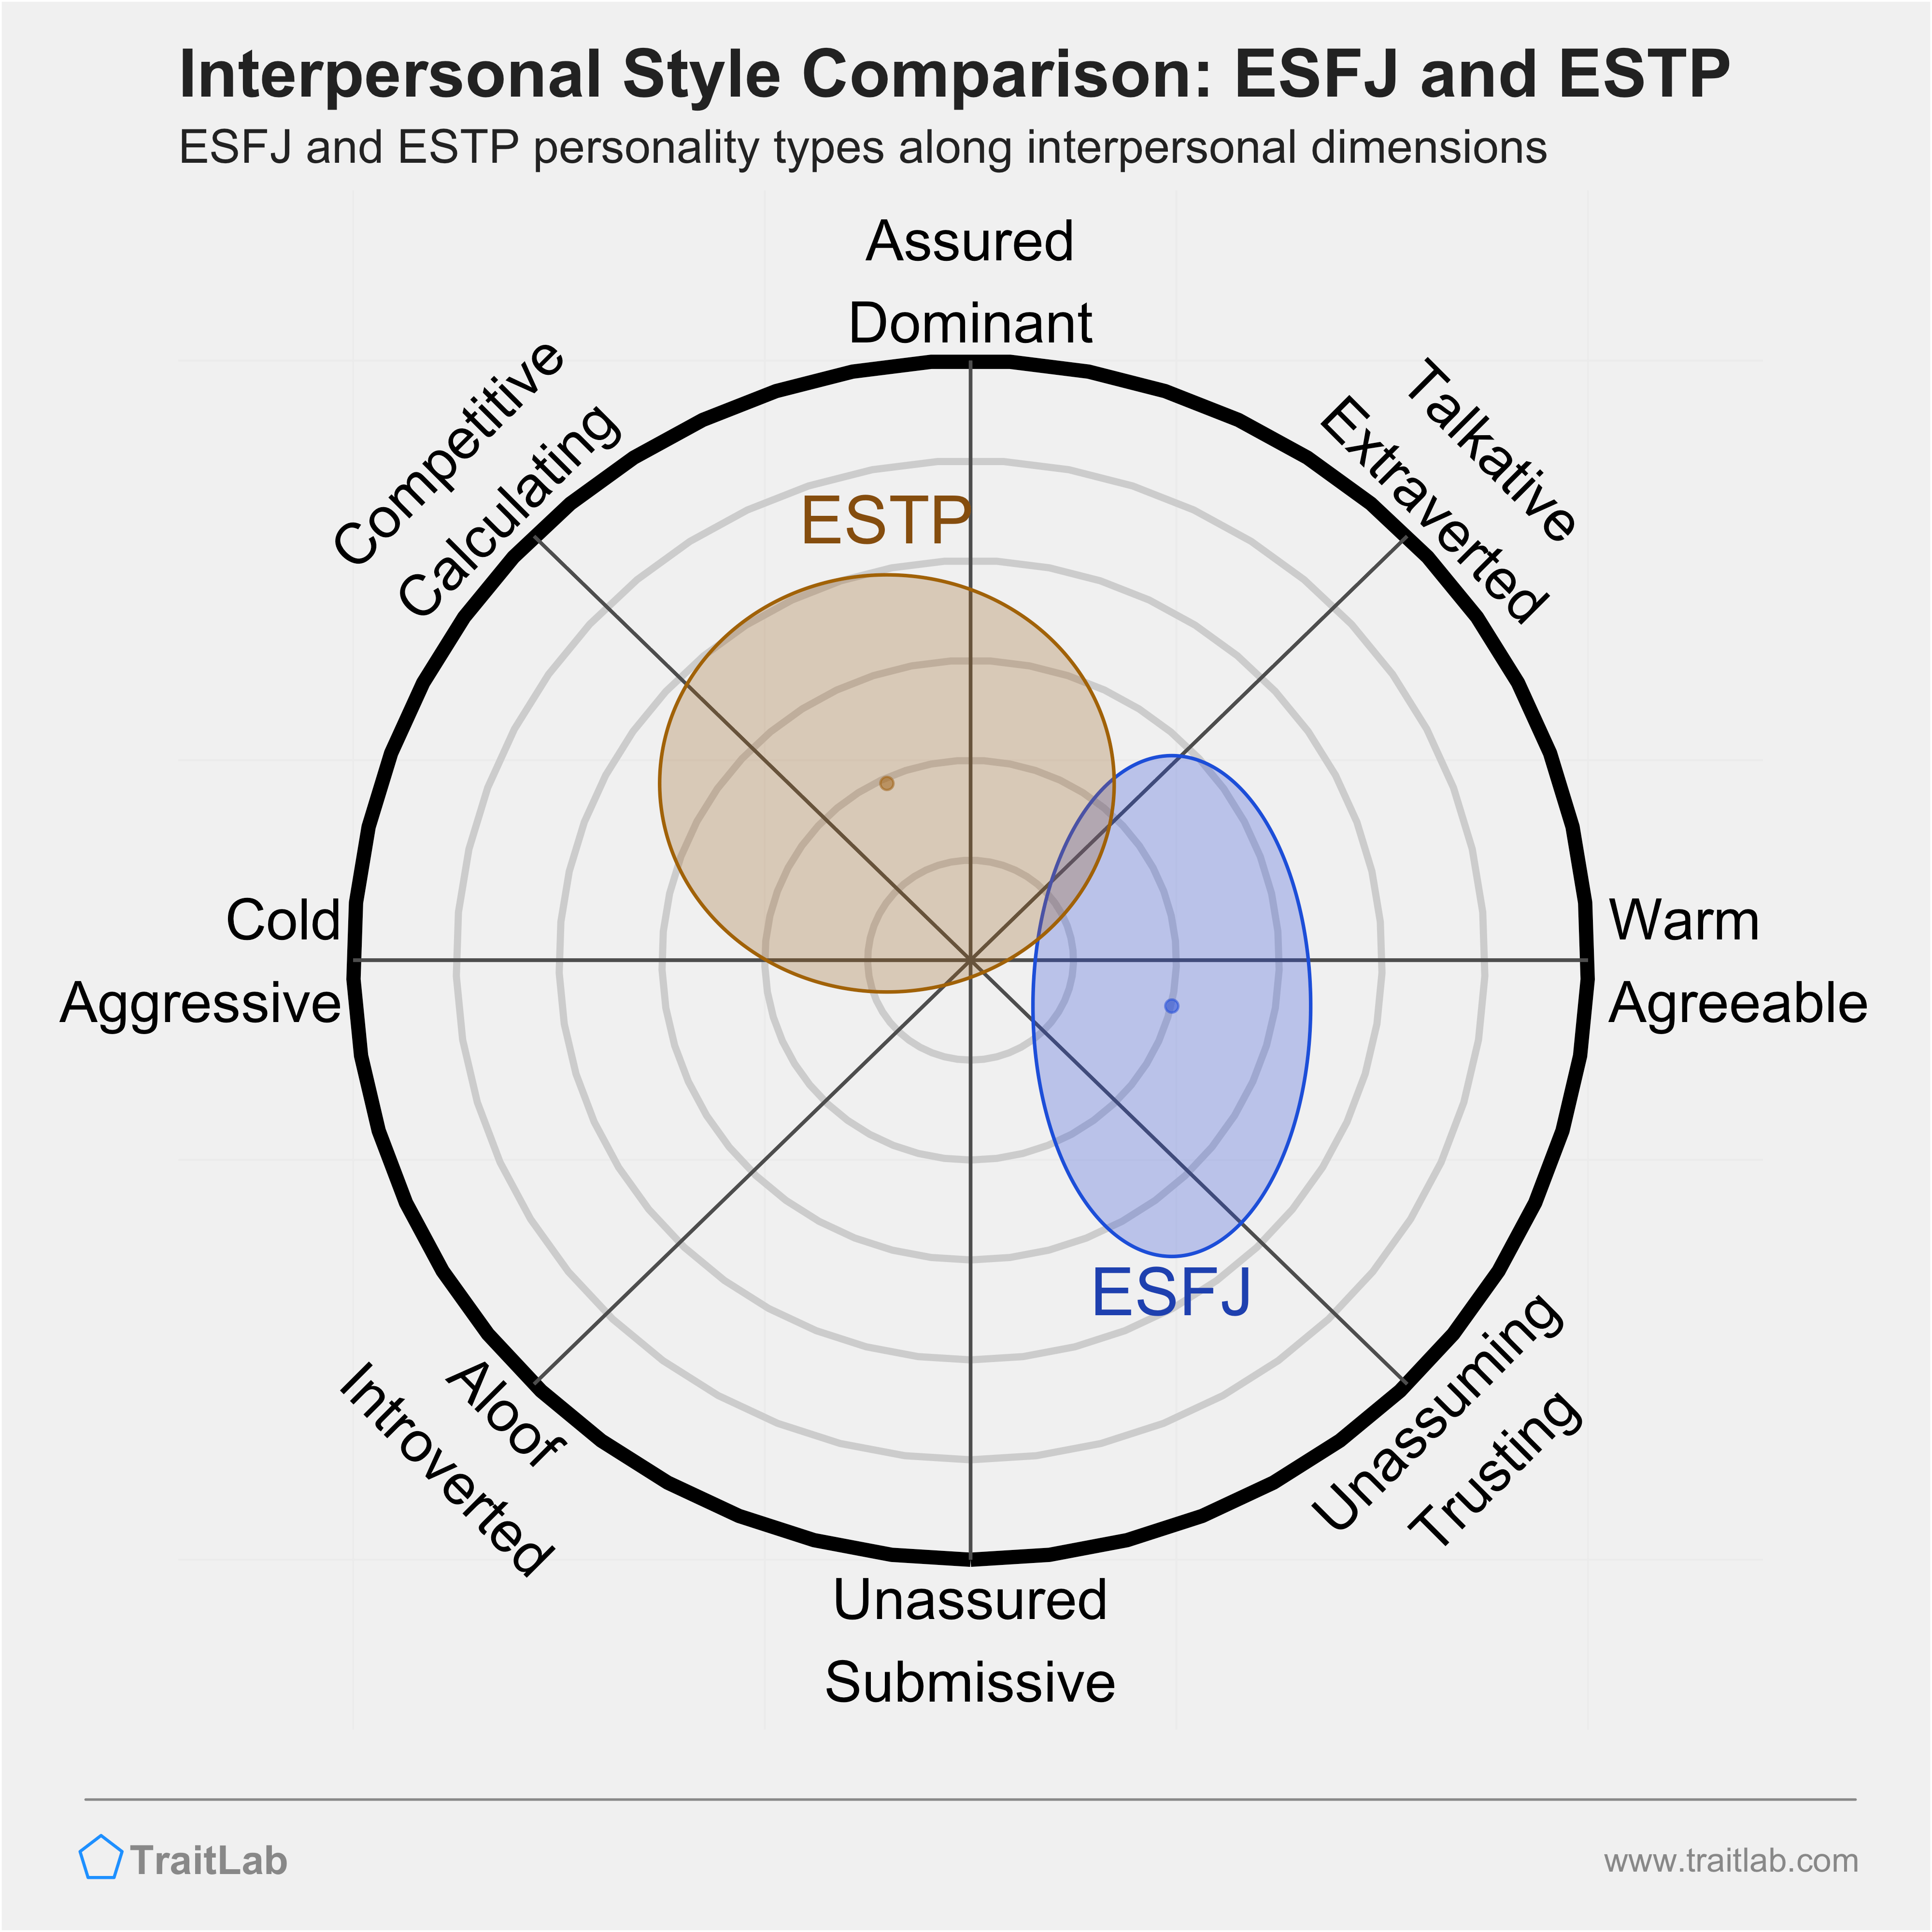 ESFJ and ESTP comparison across interpersonal dimensions